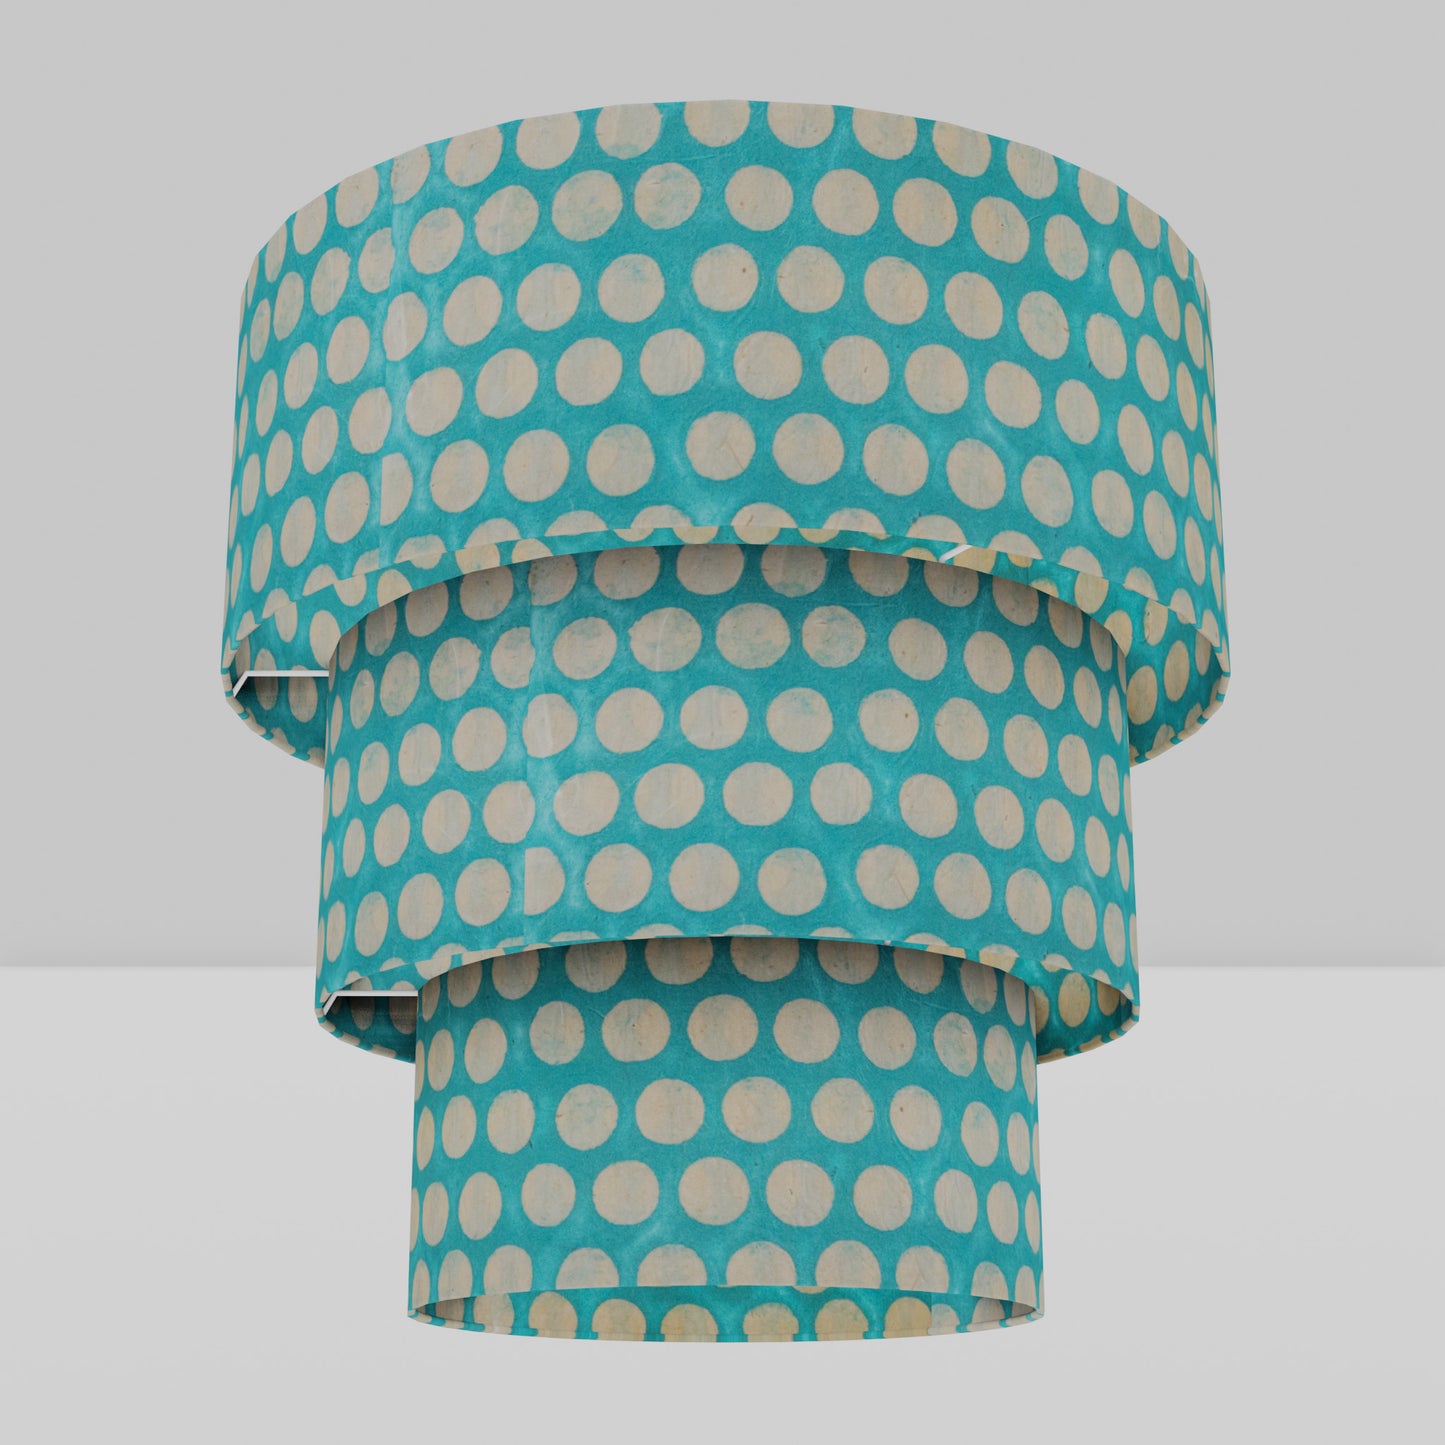 3 Tier Lamp Shade - P97 - Batik Dots on Cyan, 50cm x 20cm, 40cm x 17.5cm & 30cm x 15cm